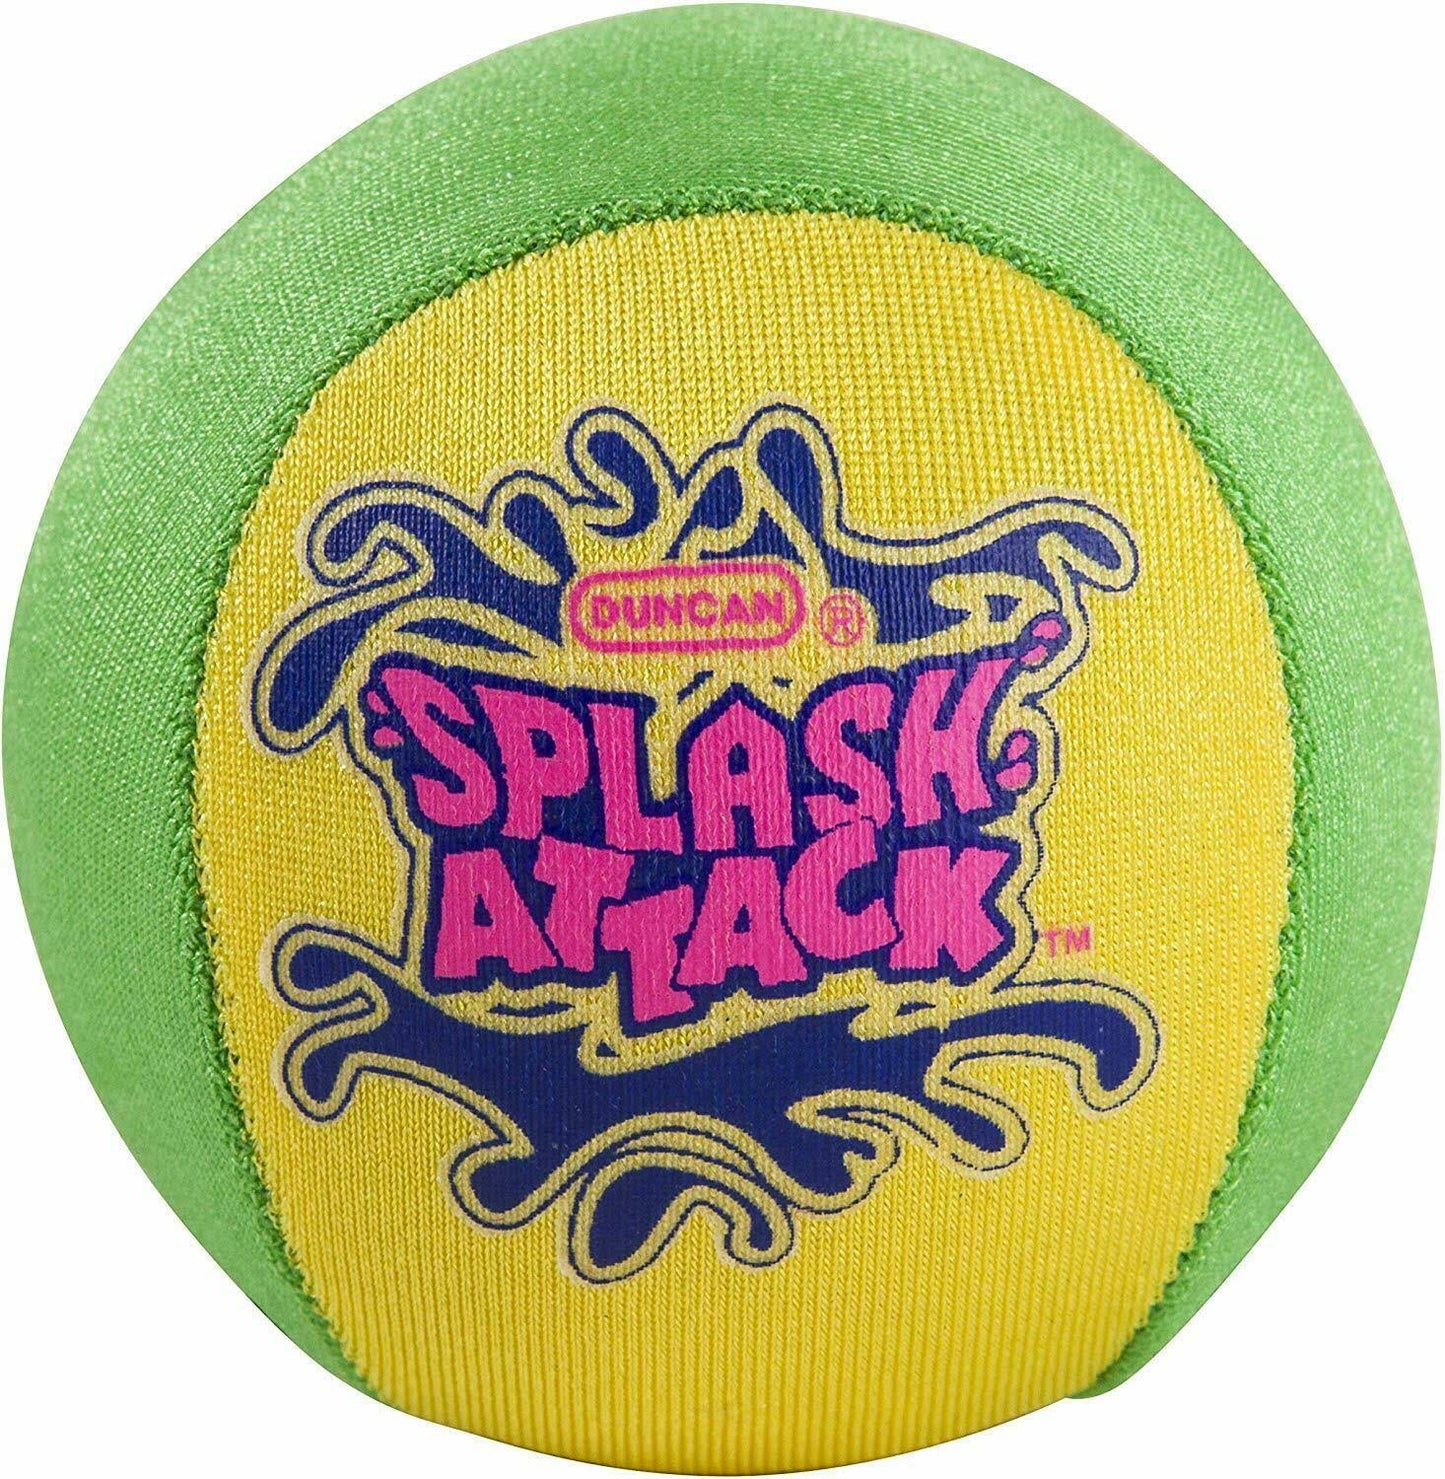 Splash Attack Water Ball